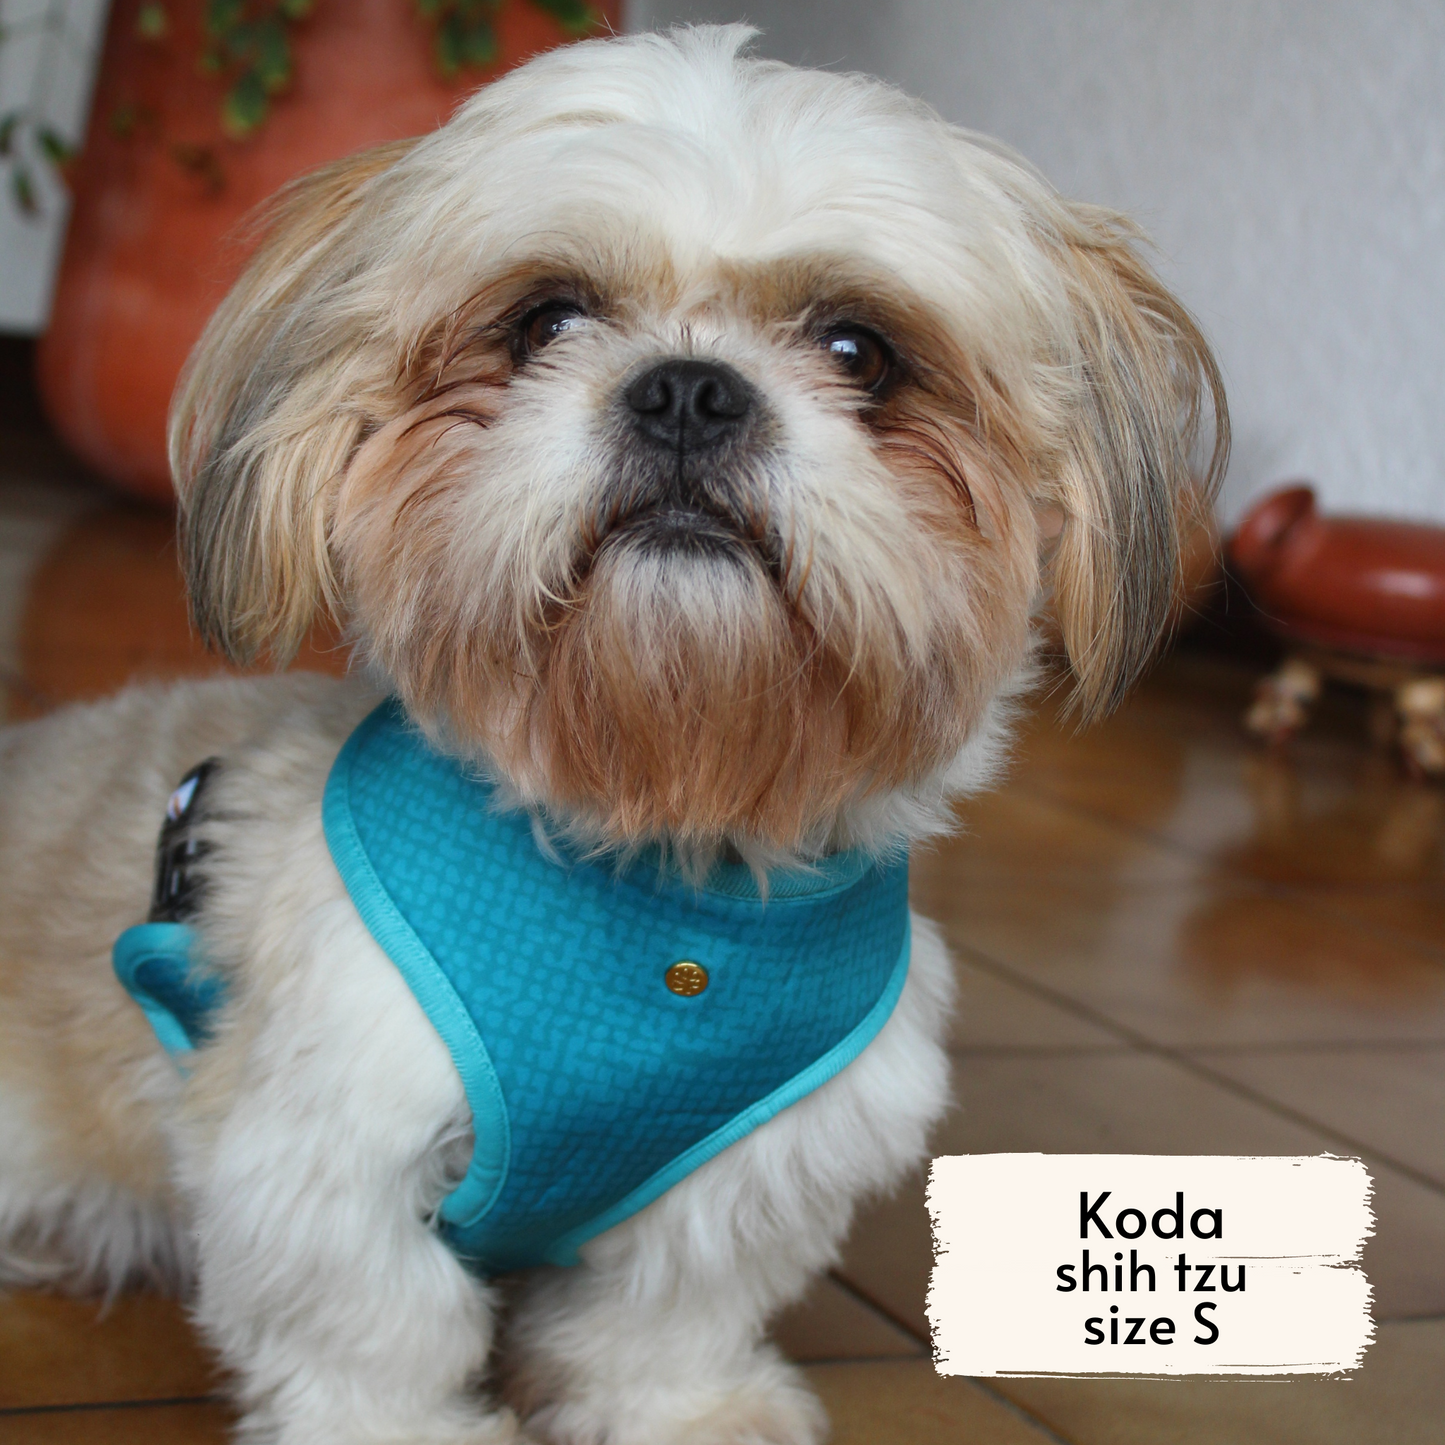 Pata Paw les alpes harness as seen on a small dog, Koda, a shih tzu.